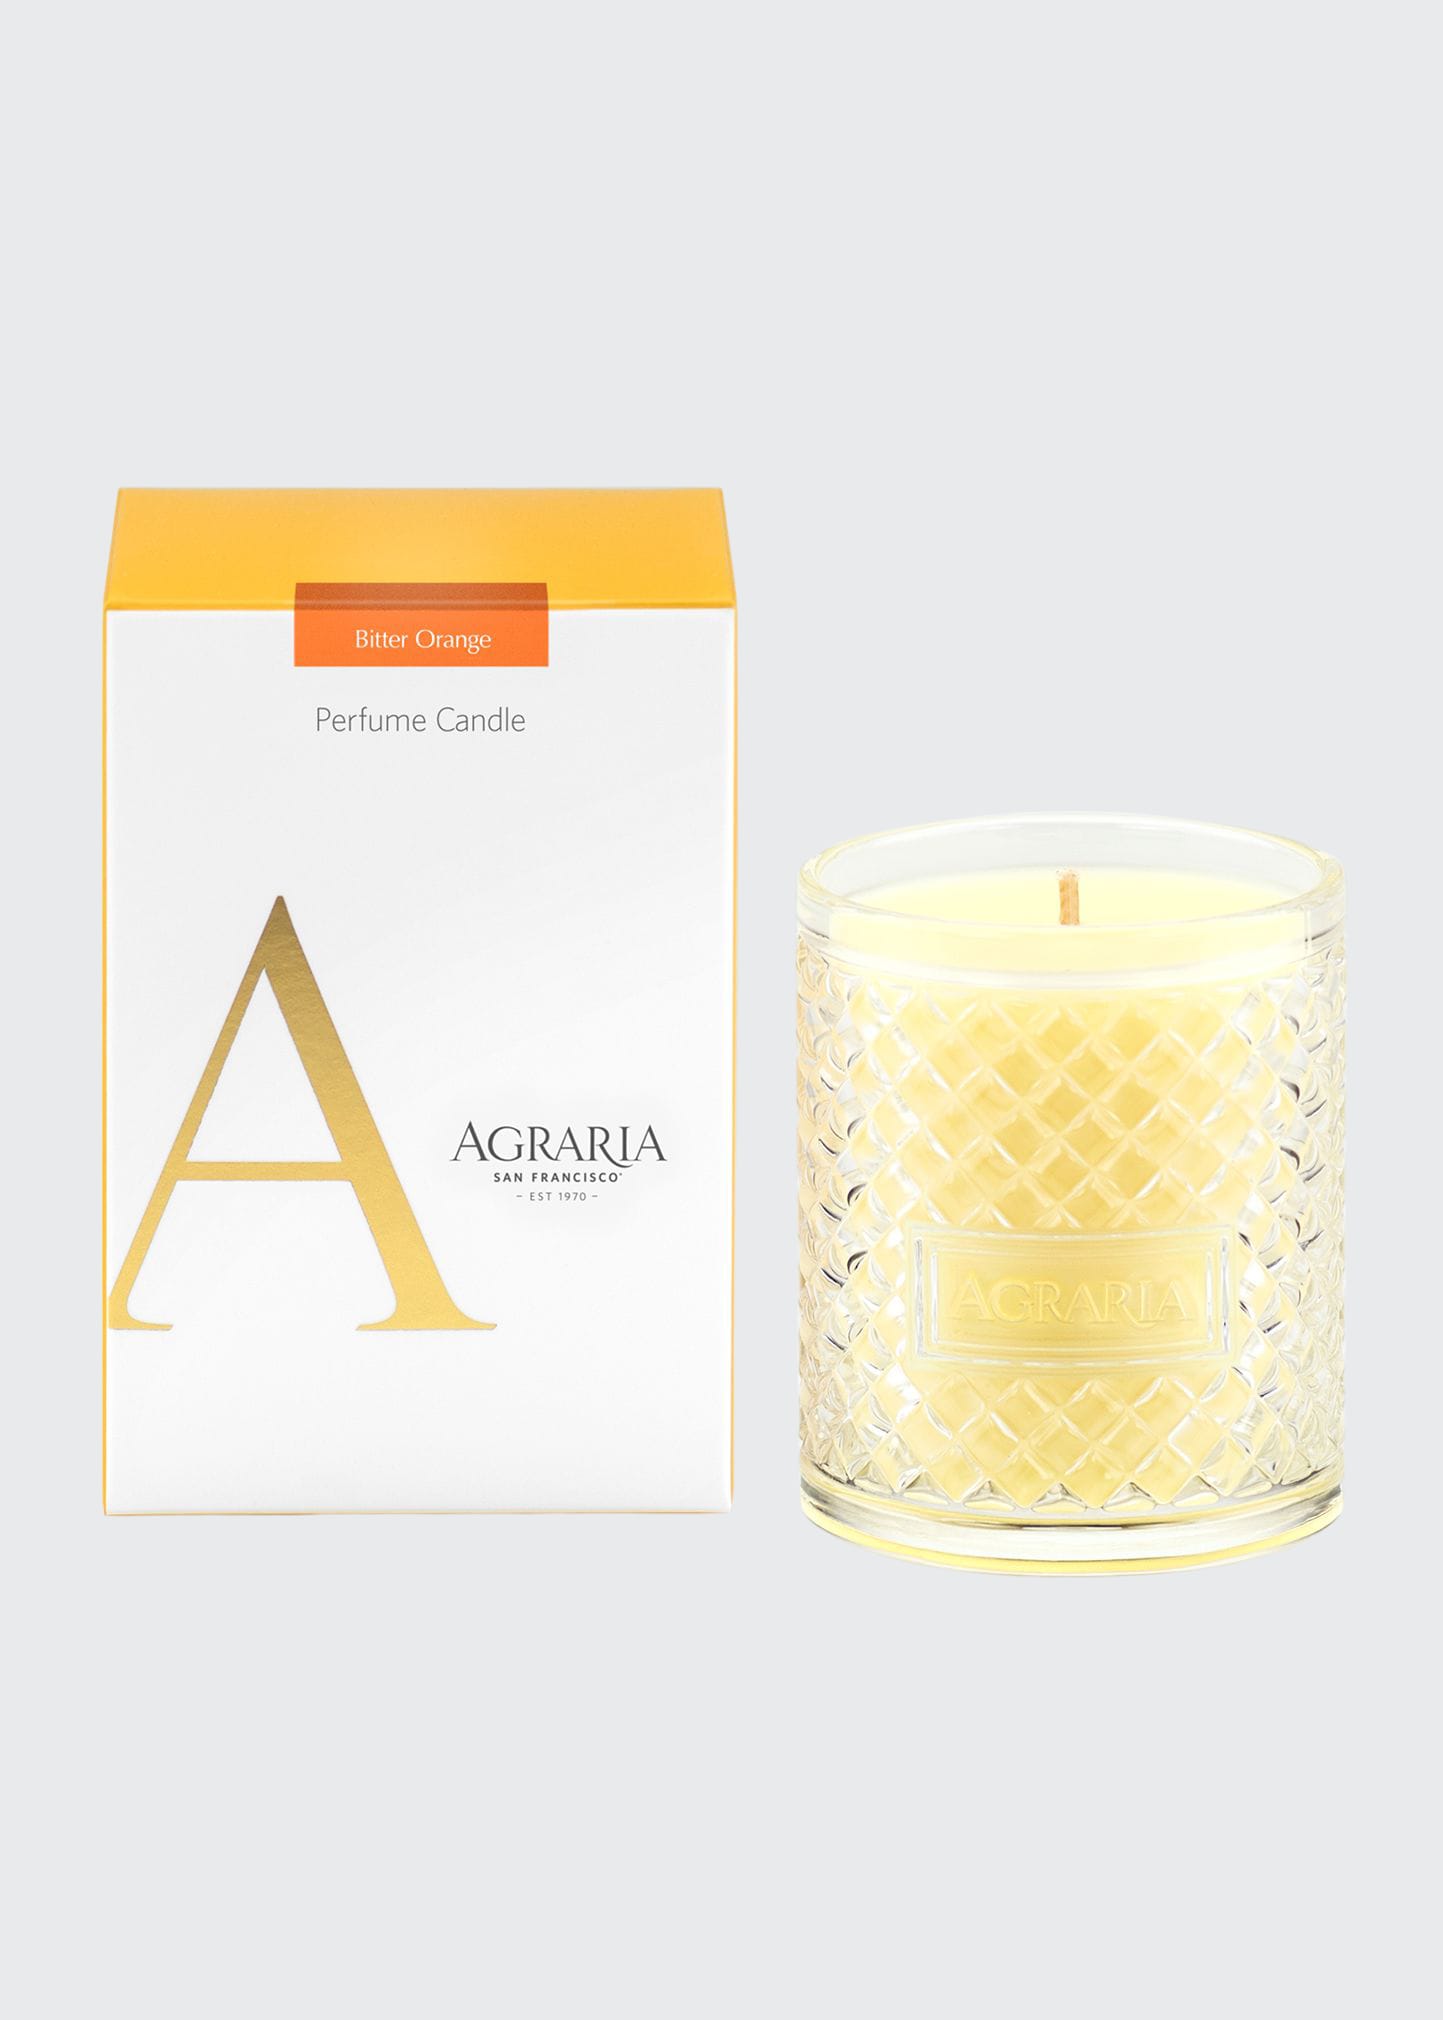 Agraria 7 oz. Bitter Orange Perfume Candle